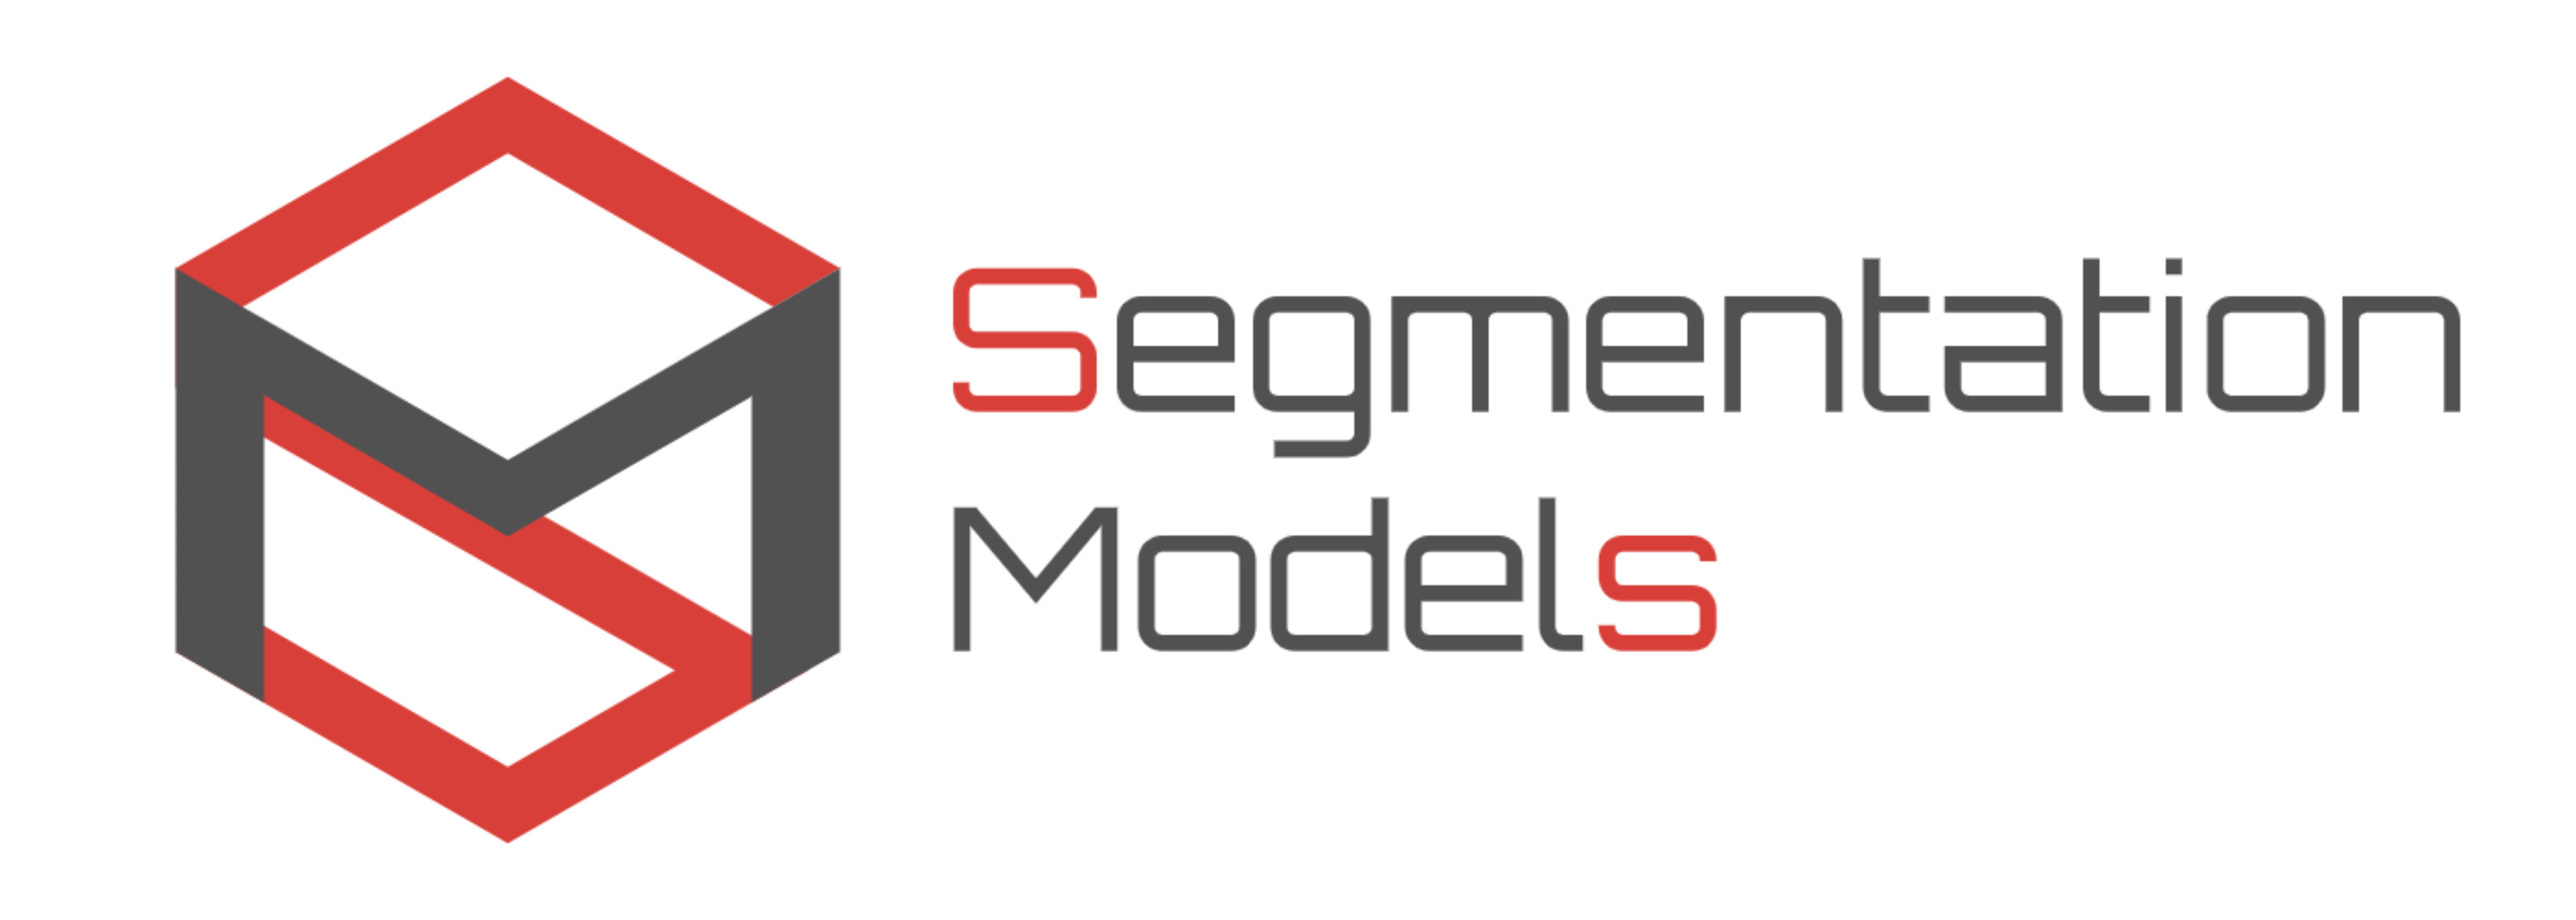 segmentation_models